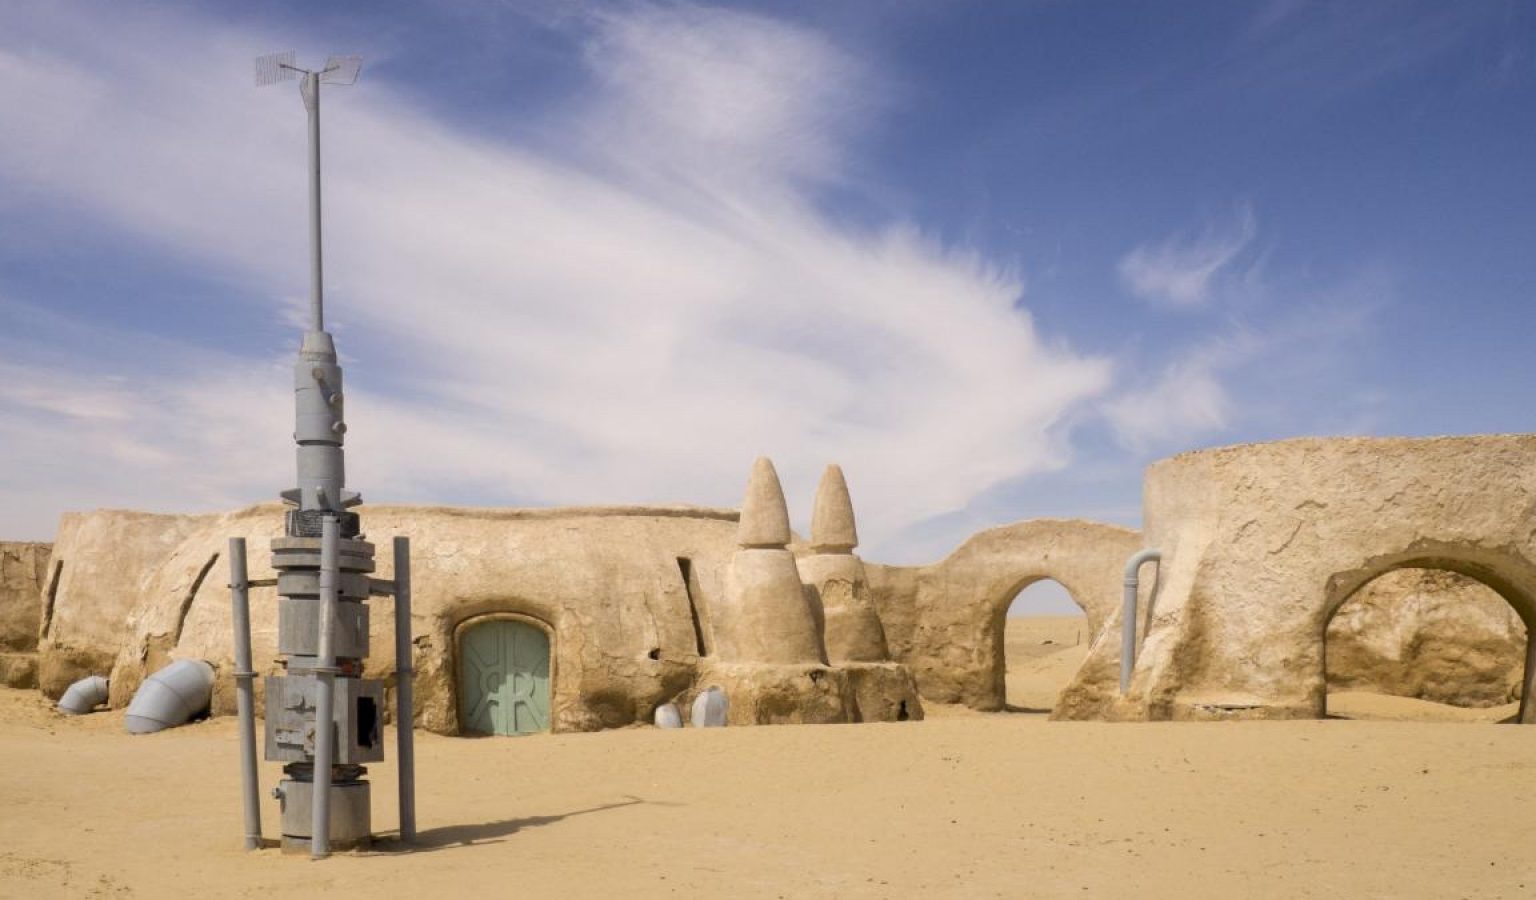 Star wars istock image showing desert like setting